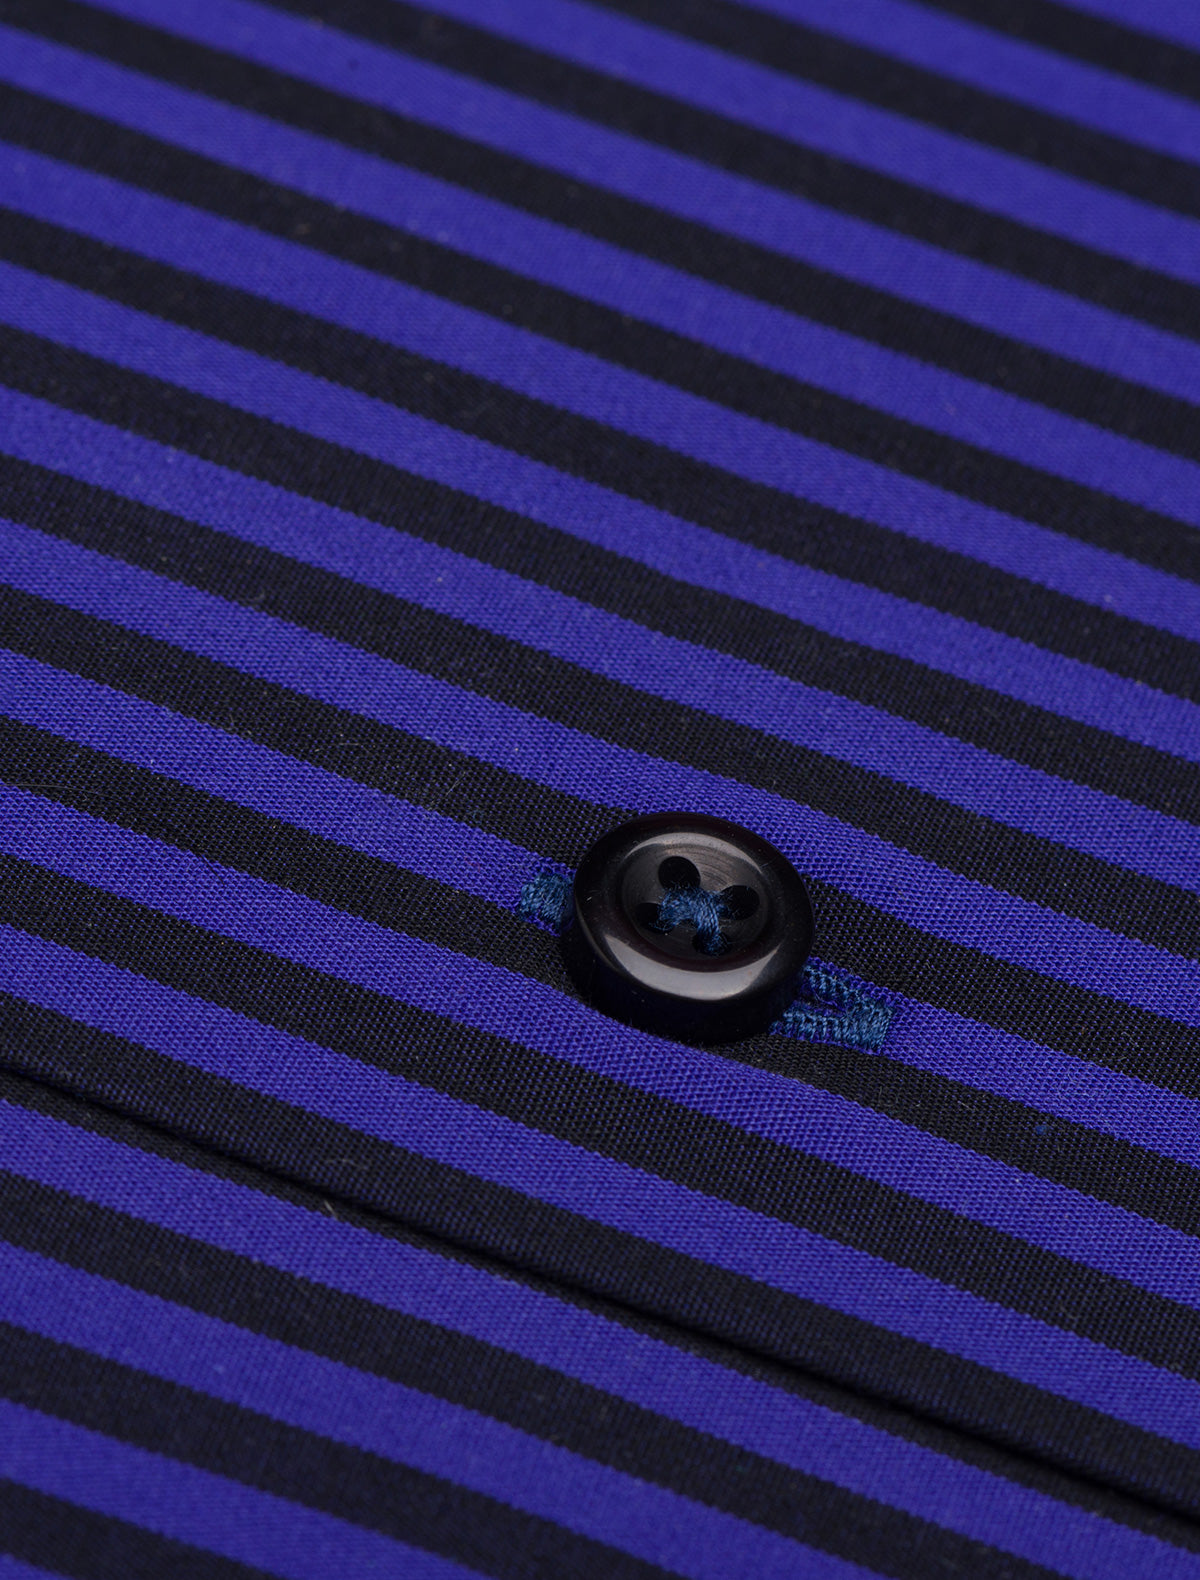 BLUE-BLACK STRIPED SHIRT